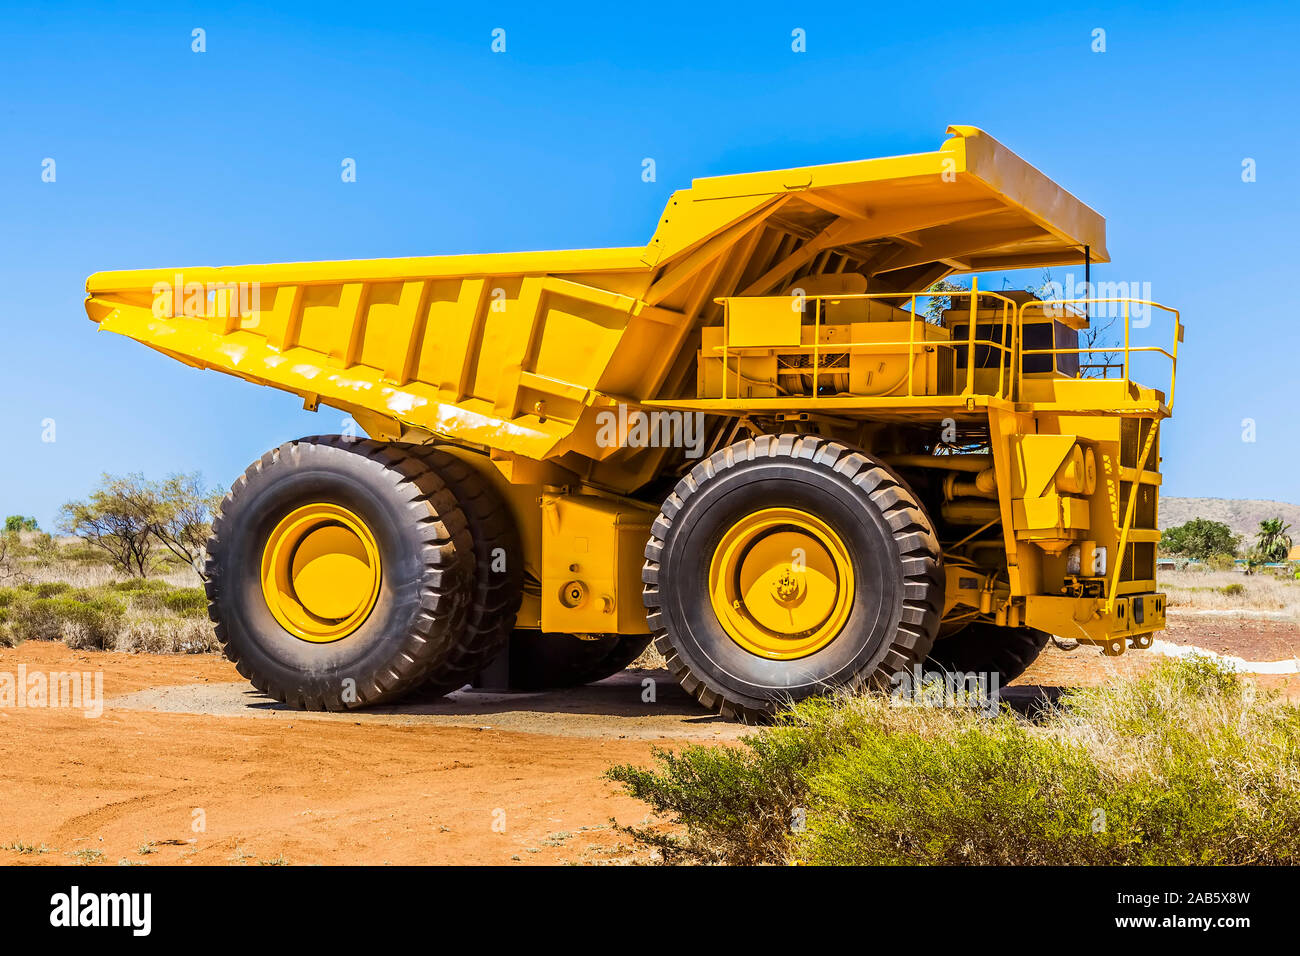 Ein grosser gelber Transporter im Australiens Outback Foto Stock